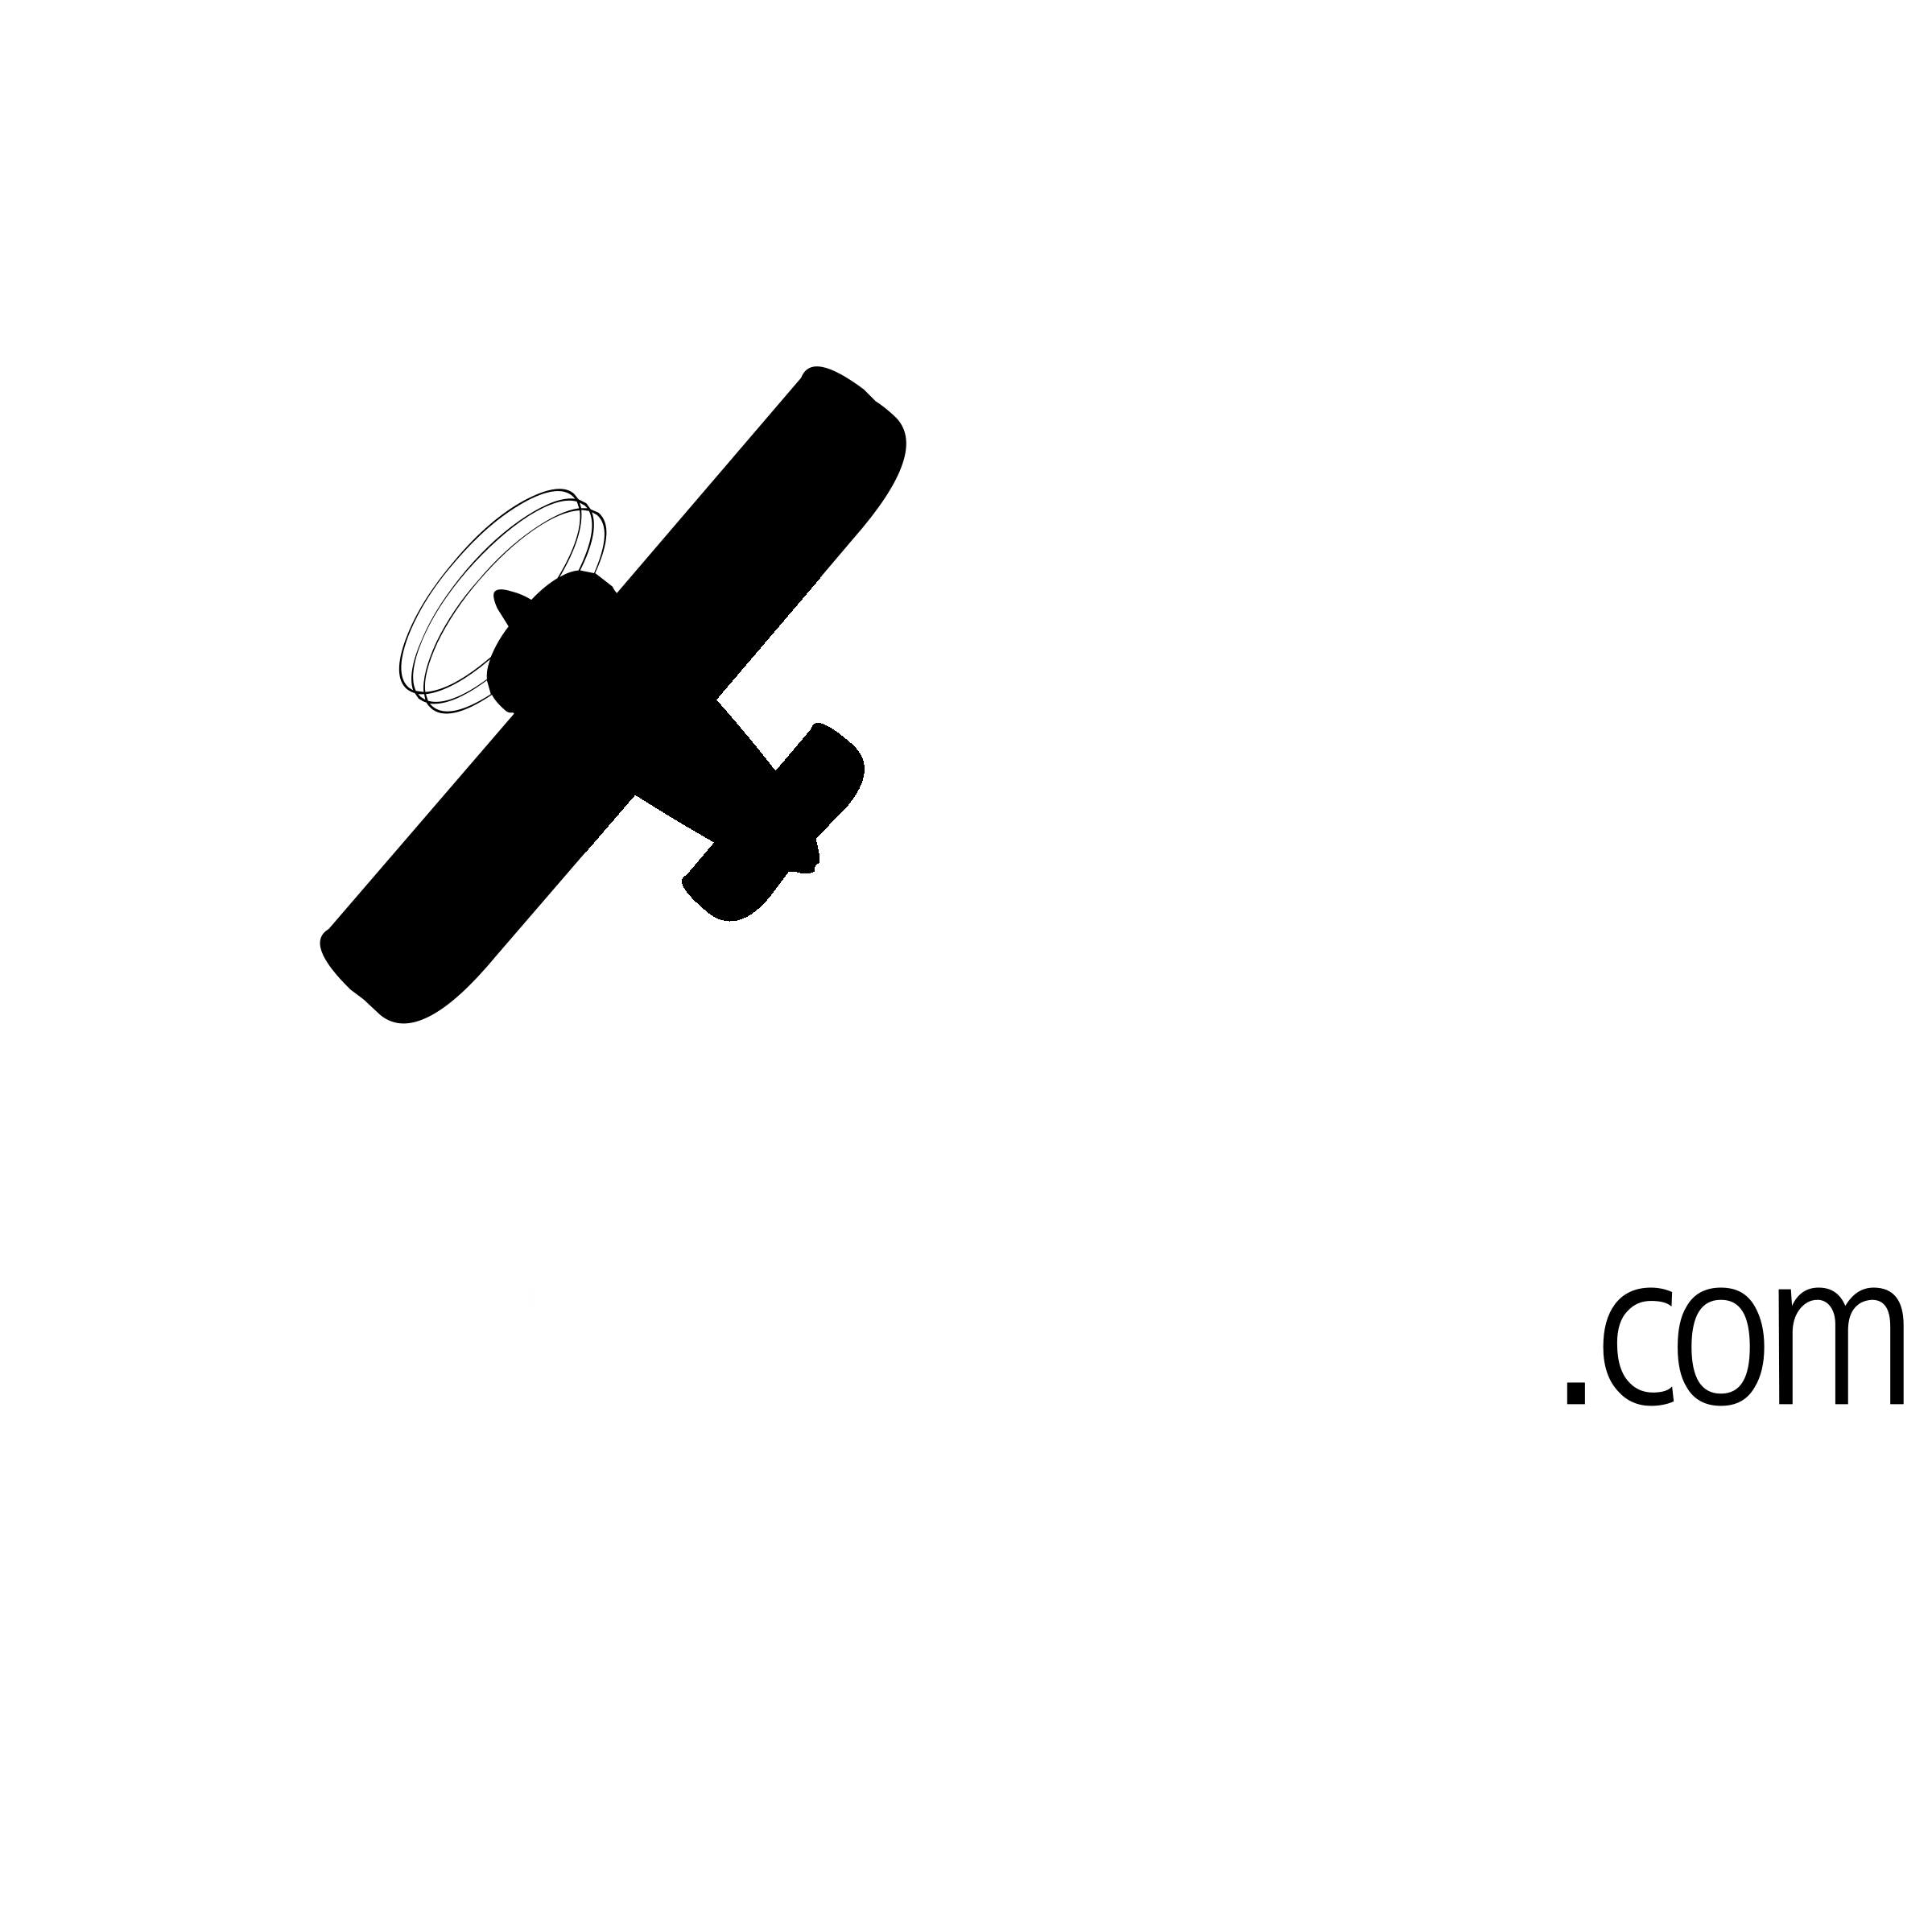 Pilot Logo - Internet pilot Logo PNG Transparent & SVG Vector